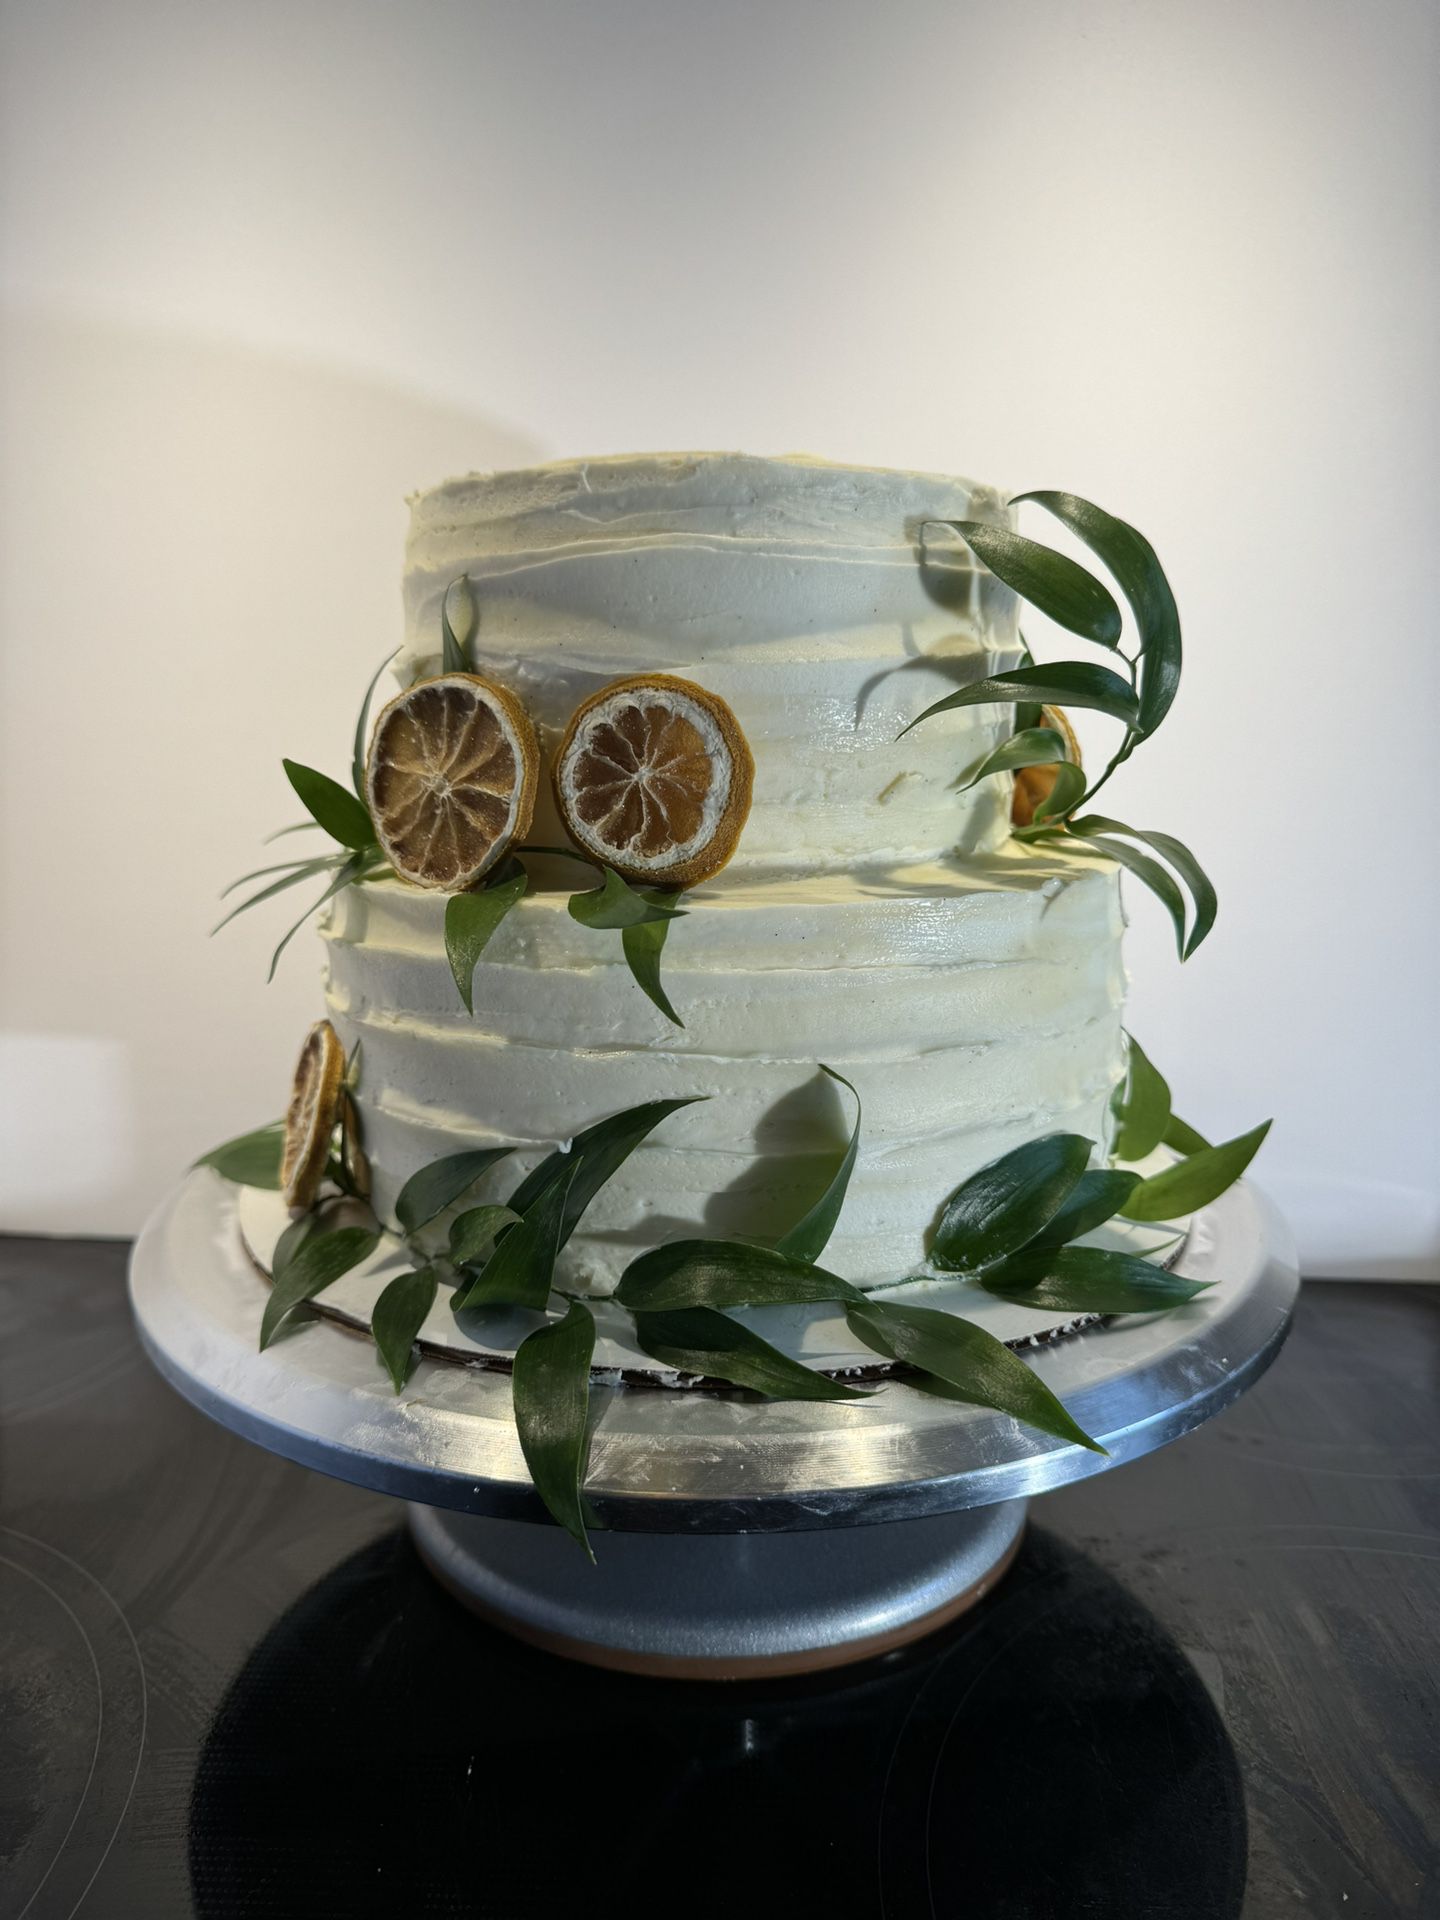 Wedding Cakes, Bridal Shower, Sprinkle, Gender Reveal Cake